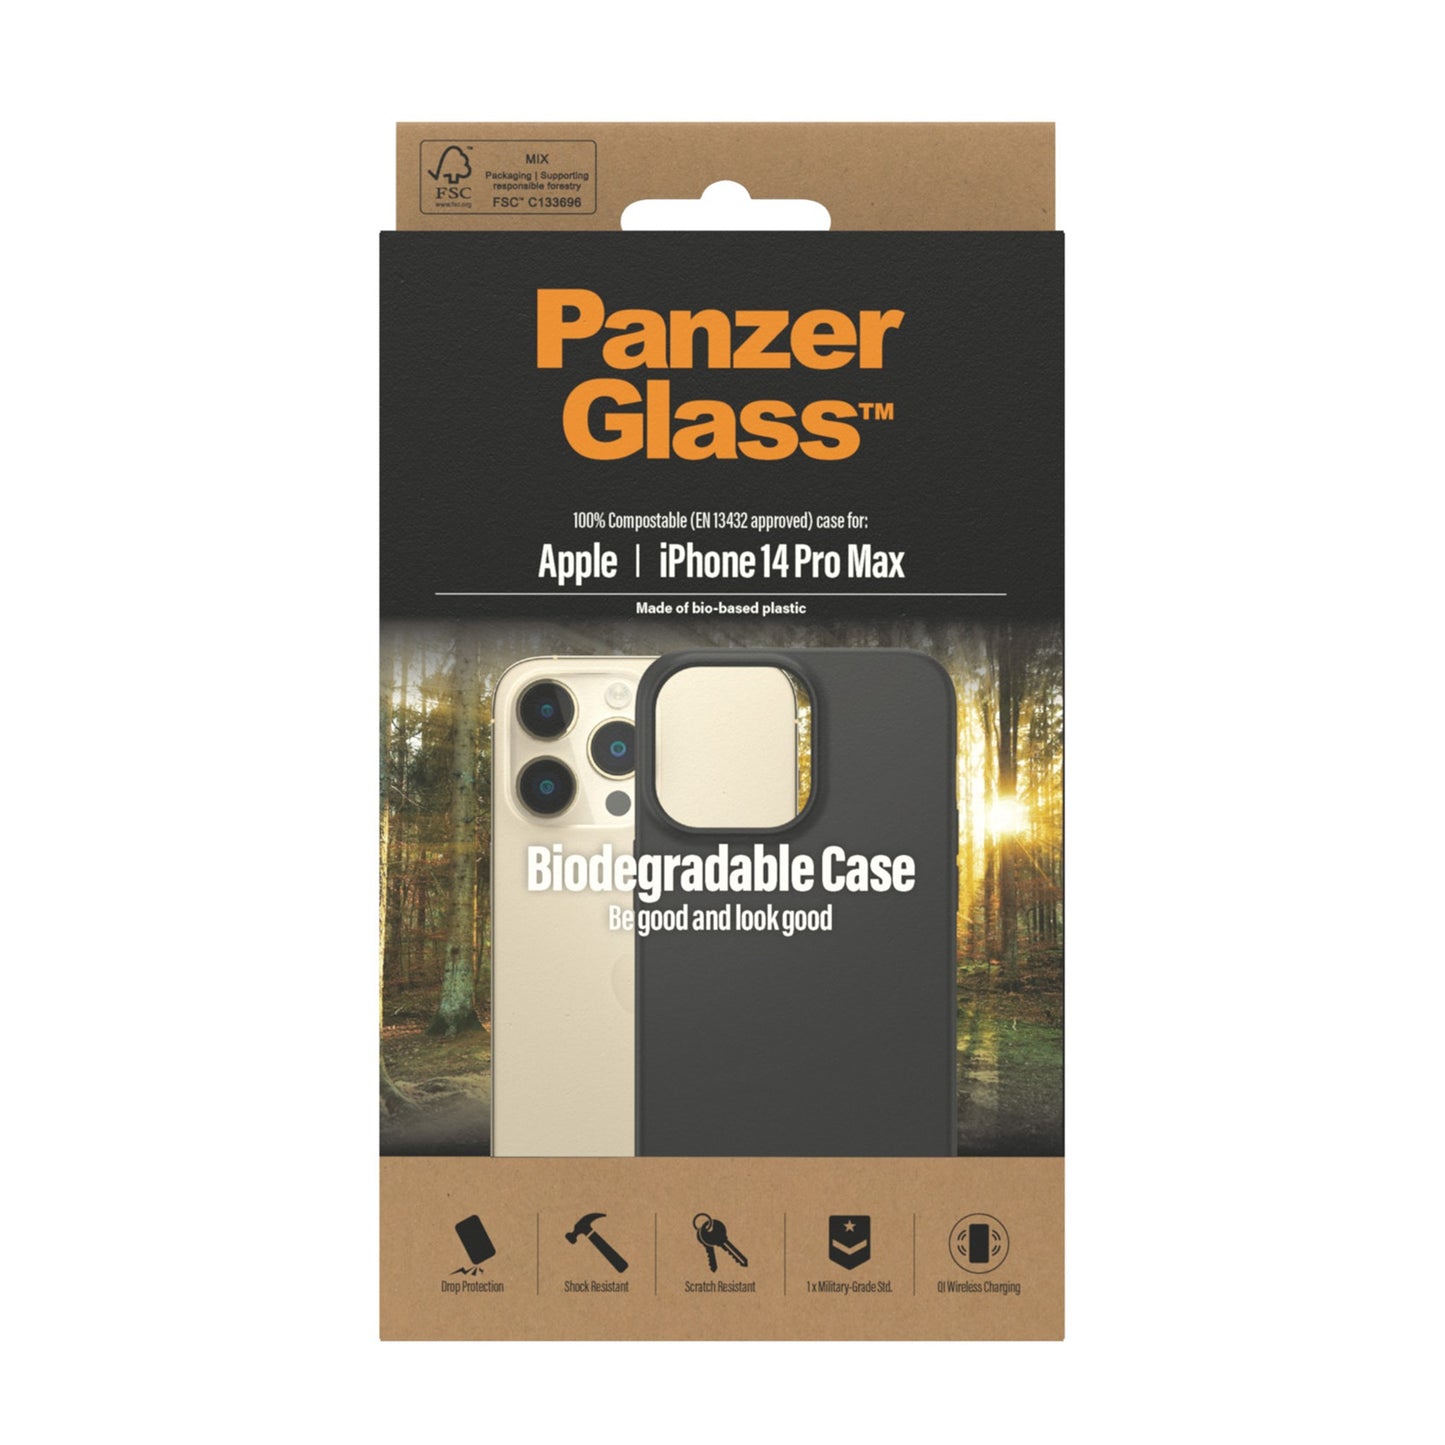 PanzerGlass™ Biodegradable Case Apple iPhone 14 Pro Max | Black 3